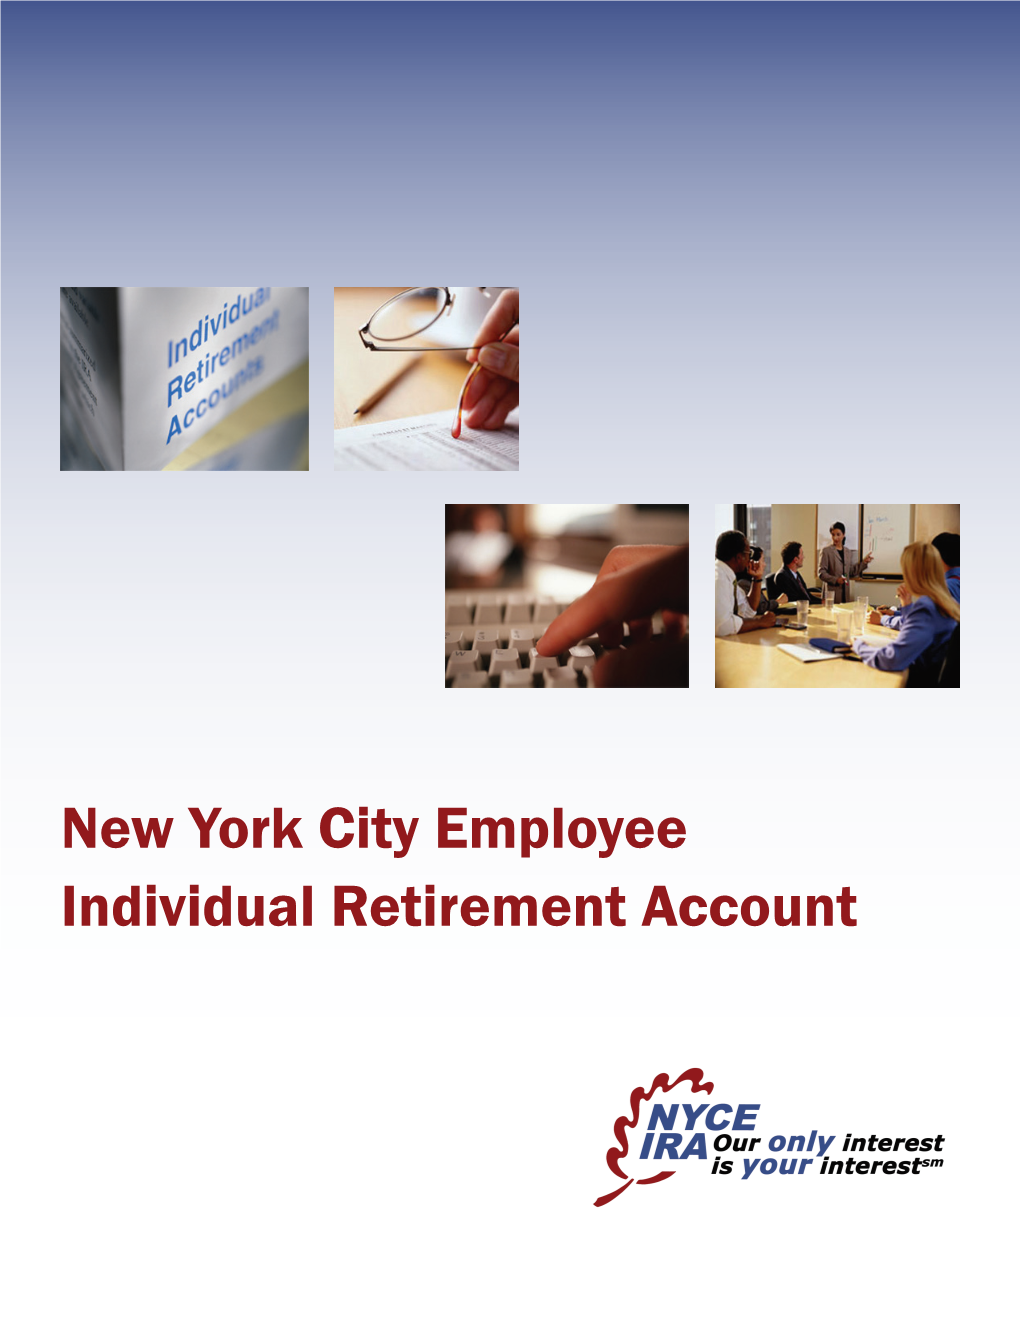 New York City Employee Individual Retirement Account